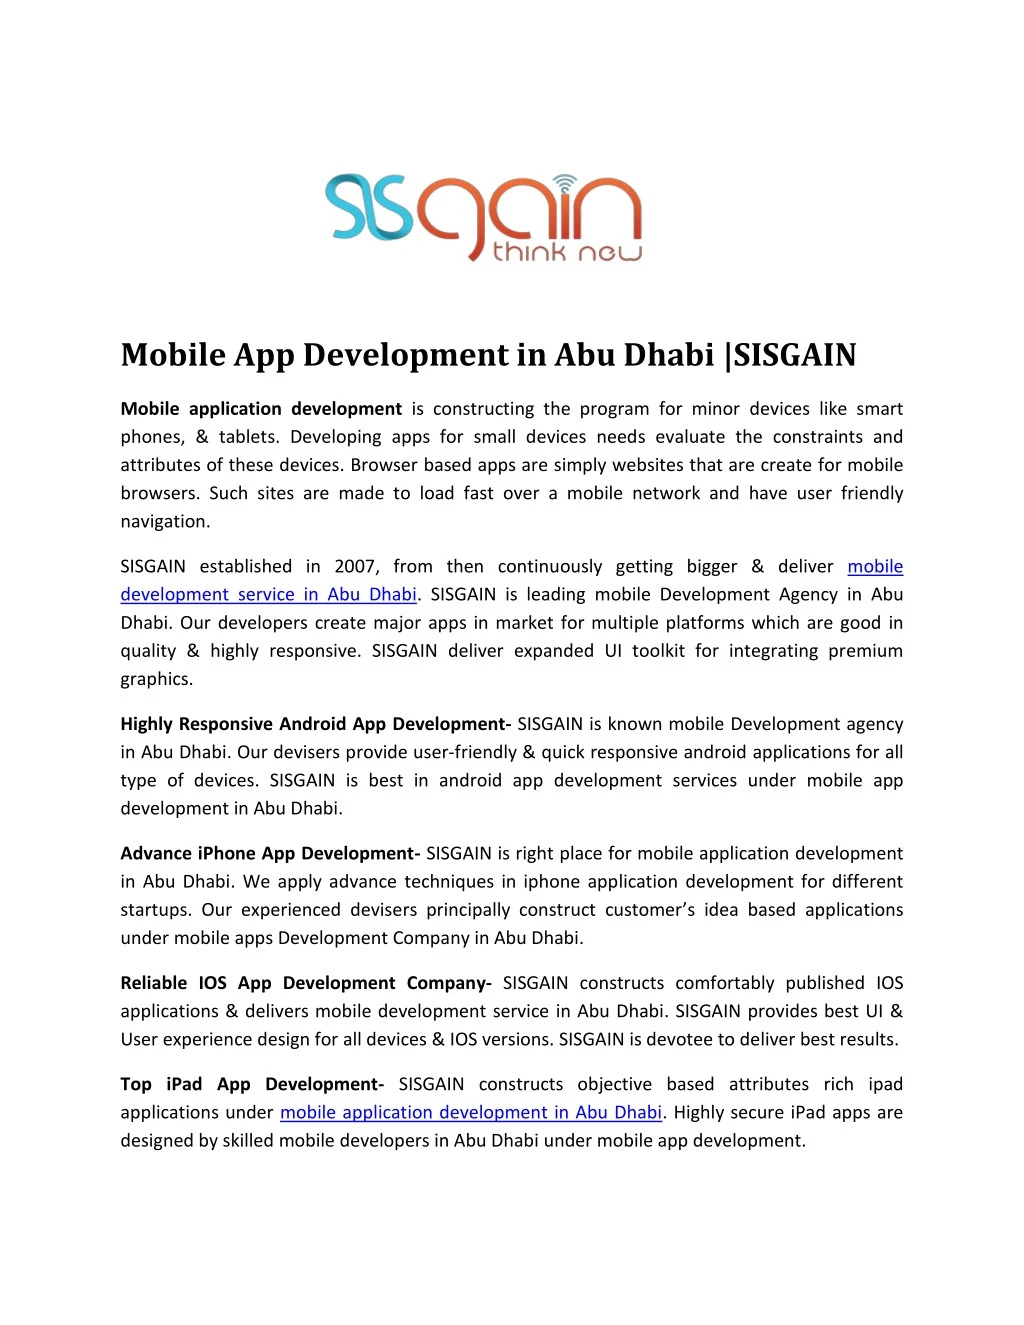 mobile app development in abu dhabi sisgain